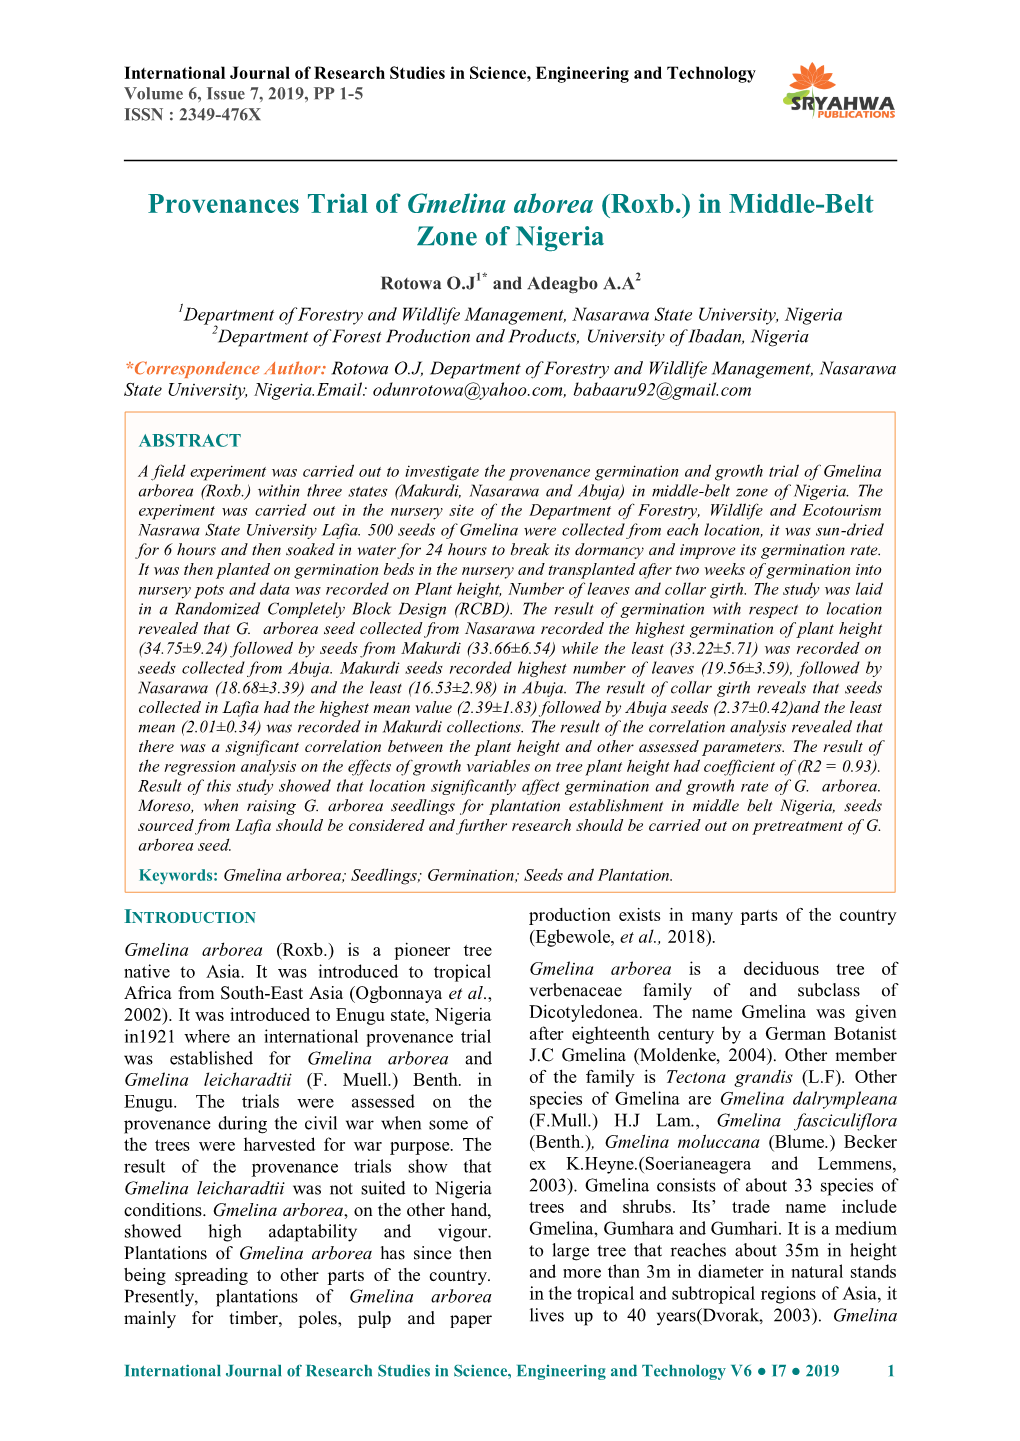 Provenances Trial of Gmelina Aborea (Roxb.) in Middle-Belt Zone of Nigeria